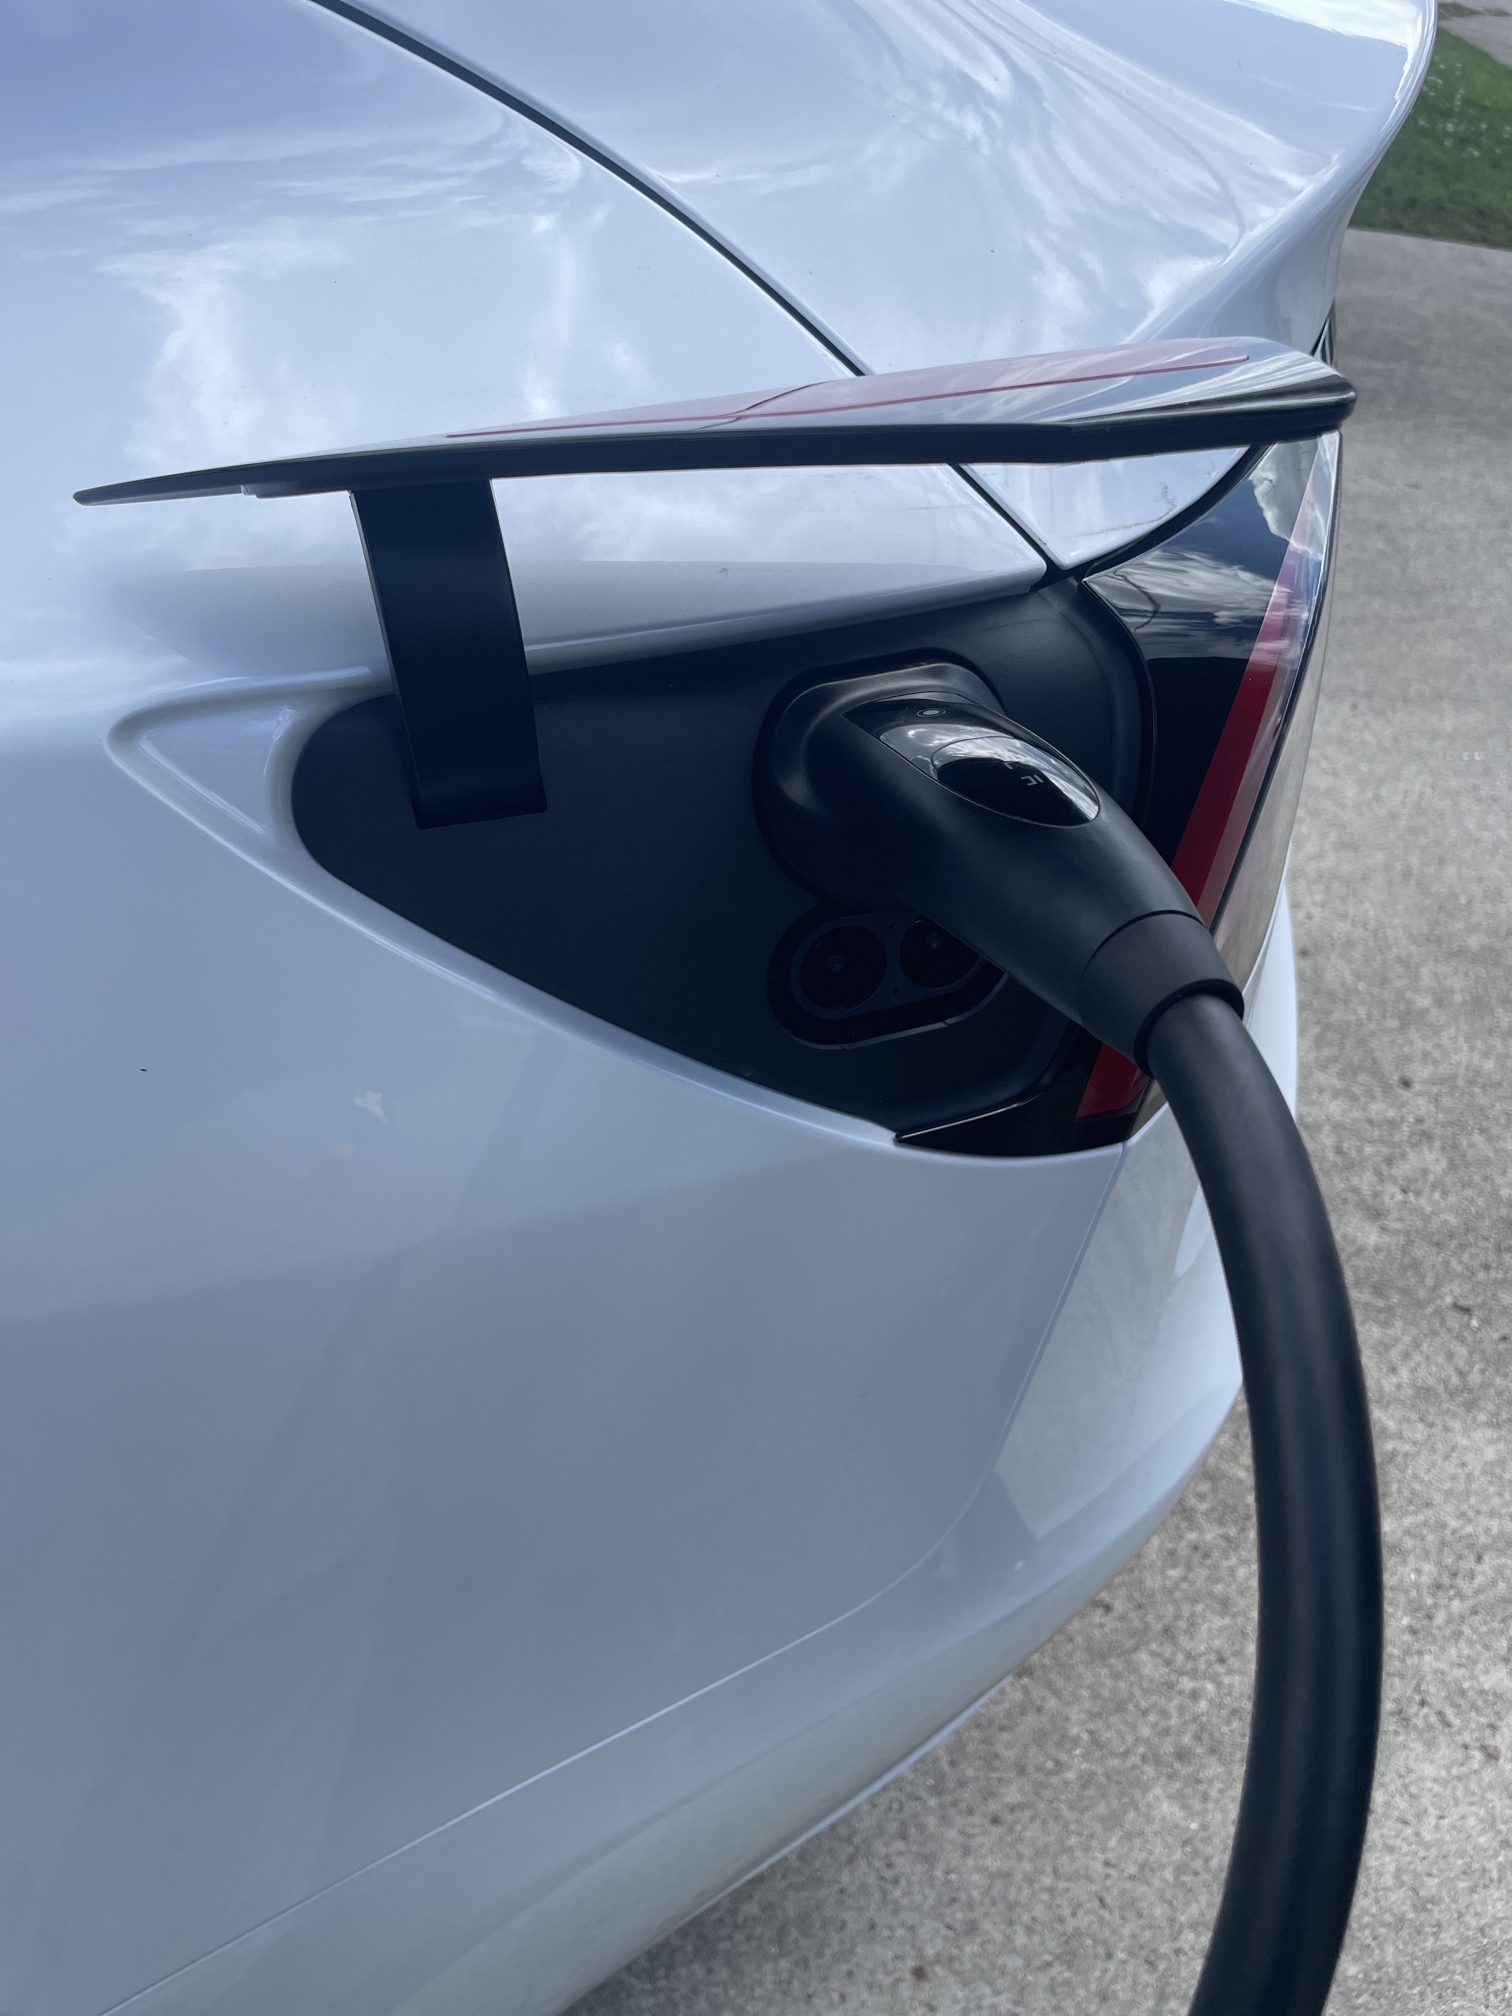 Ev Charger Plugging Into Tesla